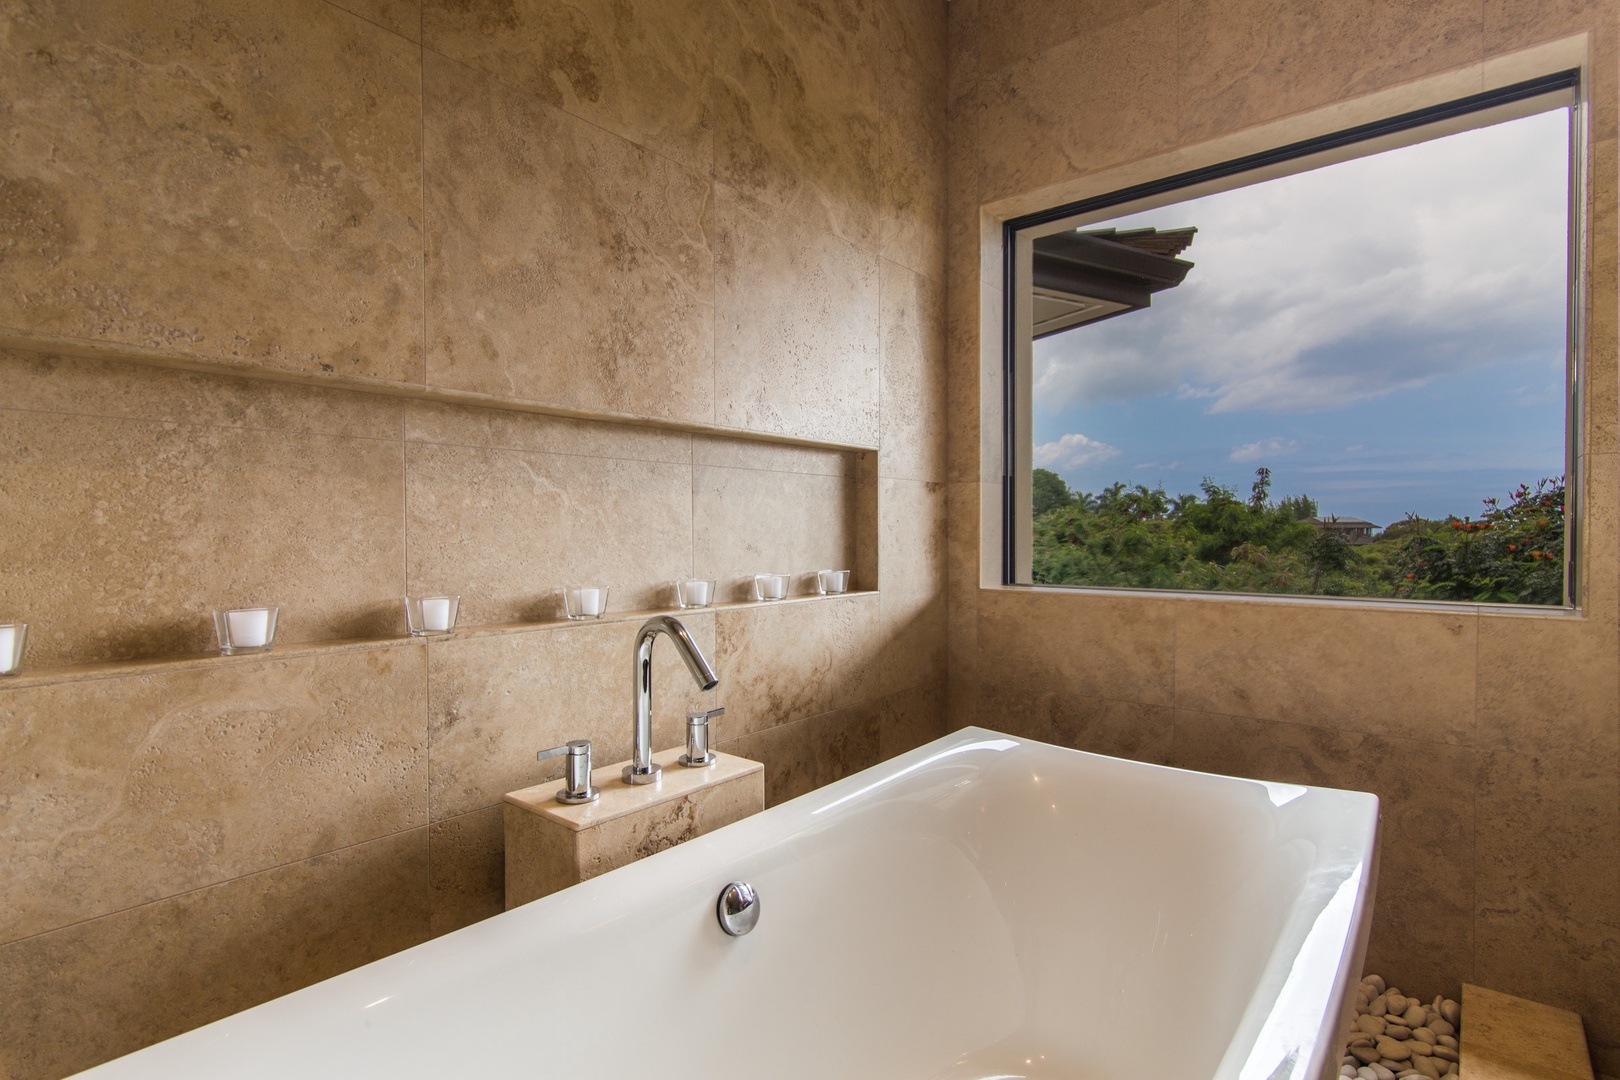 Princeville Vacation Rentals, Laulea Kailani Villa (KAUAI) - Bathroom two offers a large soaking tub with a view